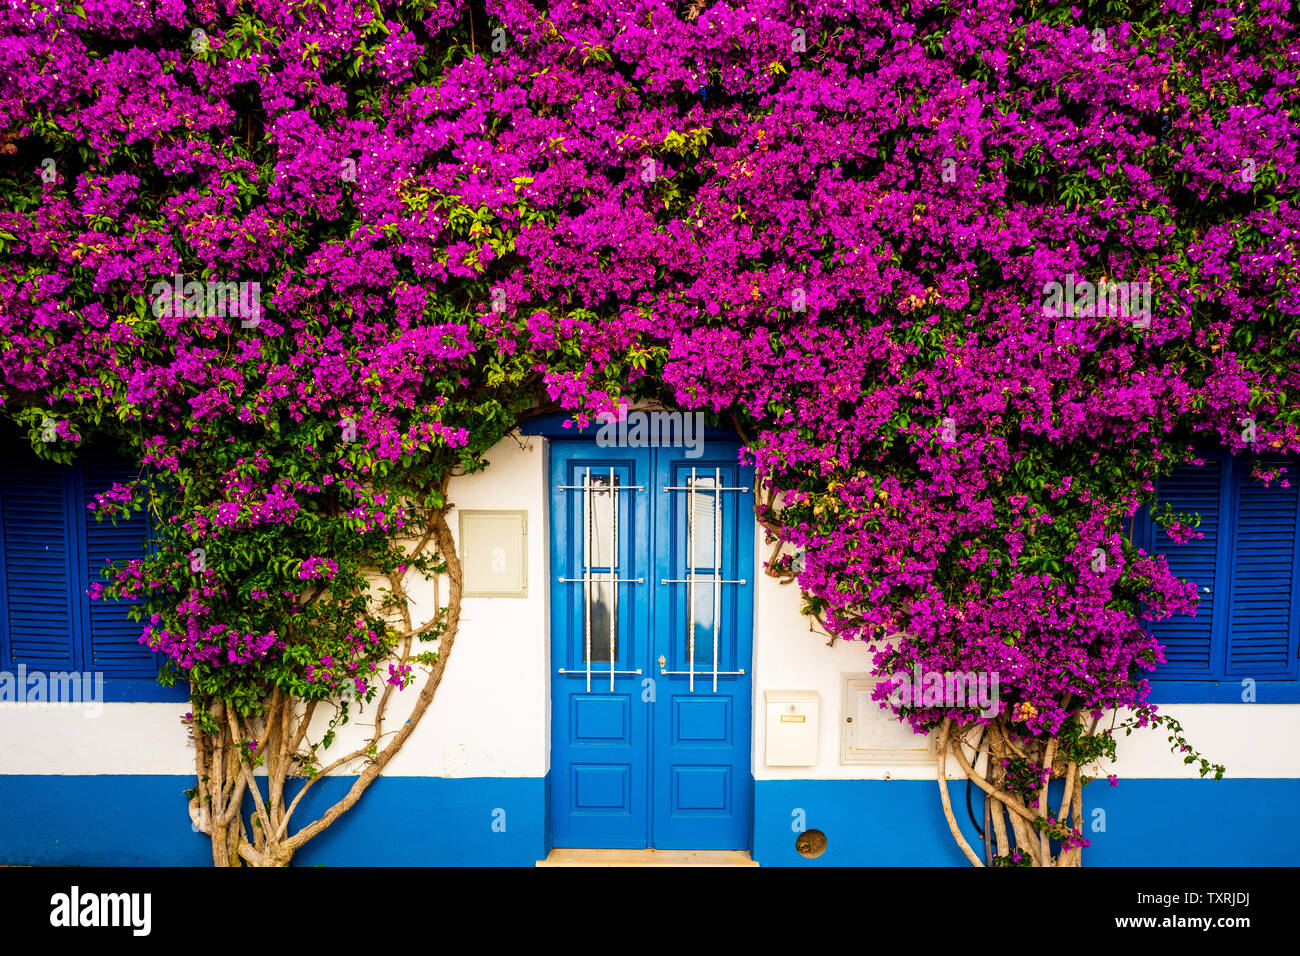 Massive bougainvillea flowers surrounding a blue doorway Stock Photo